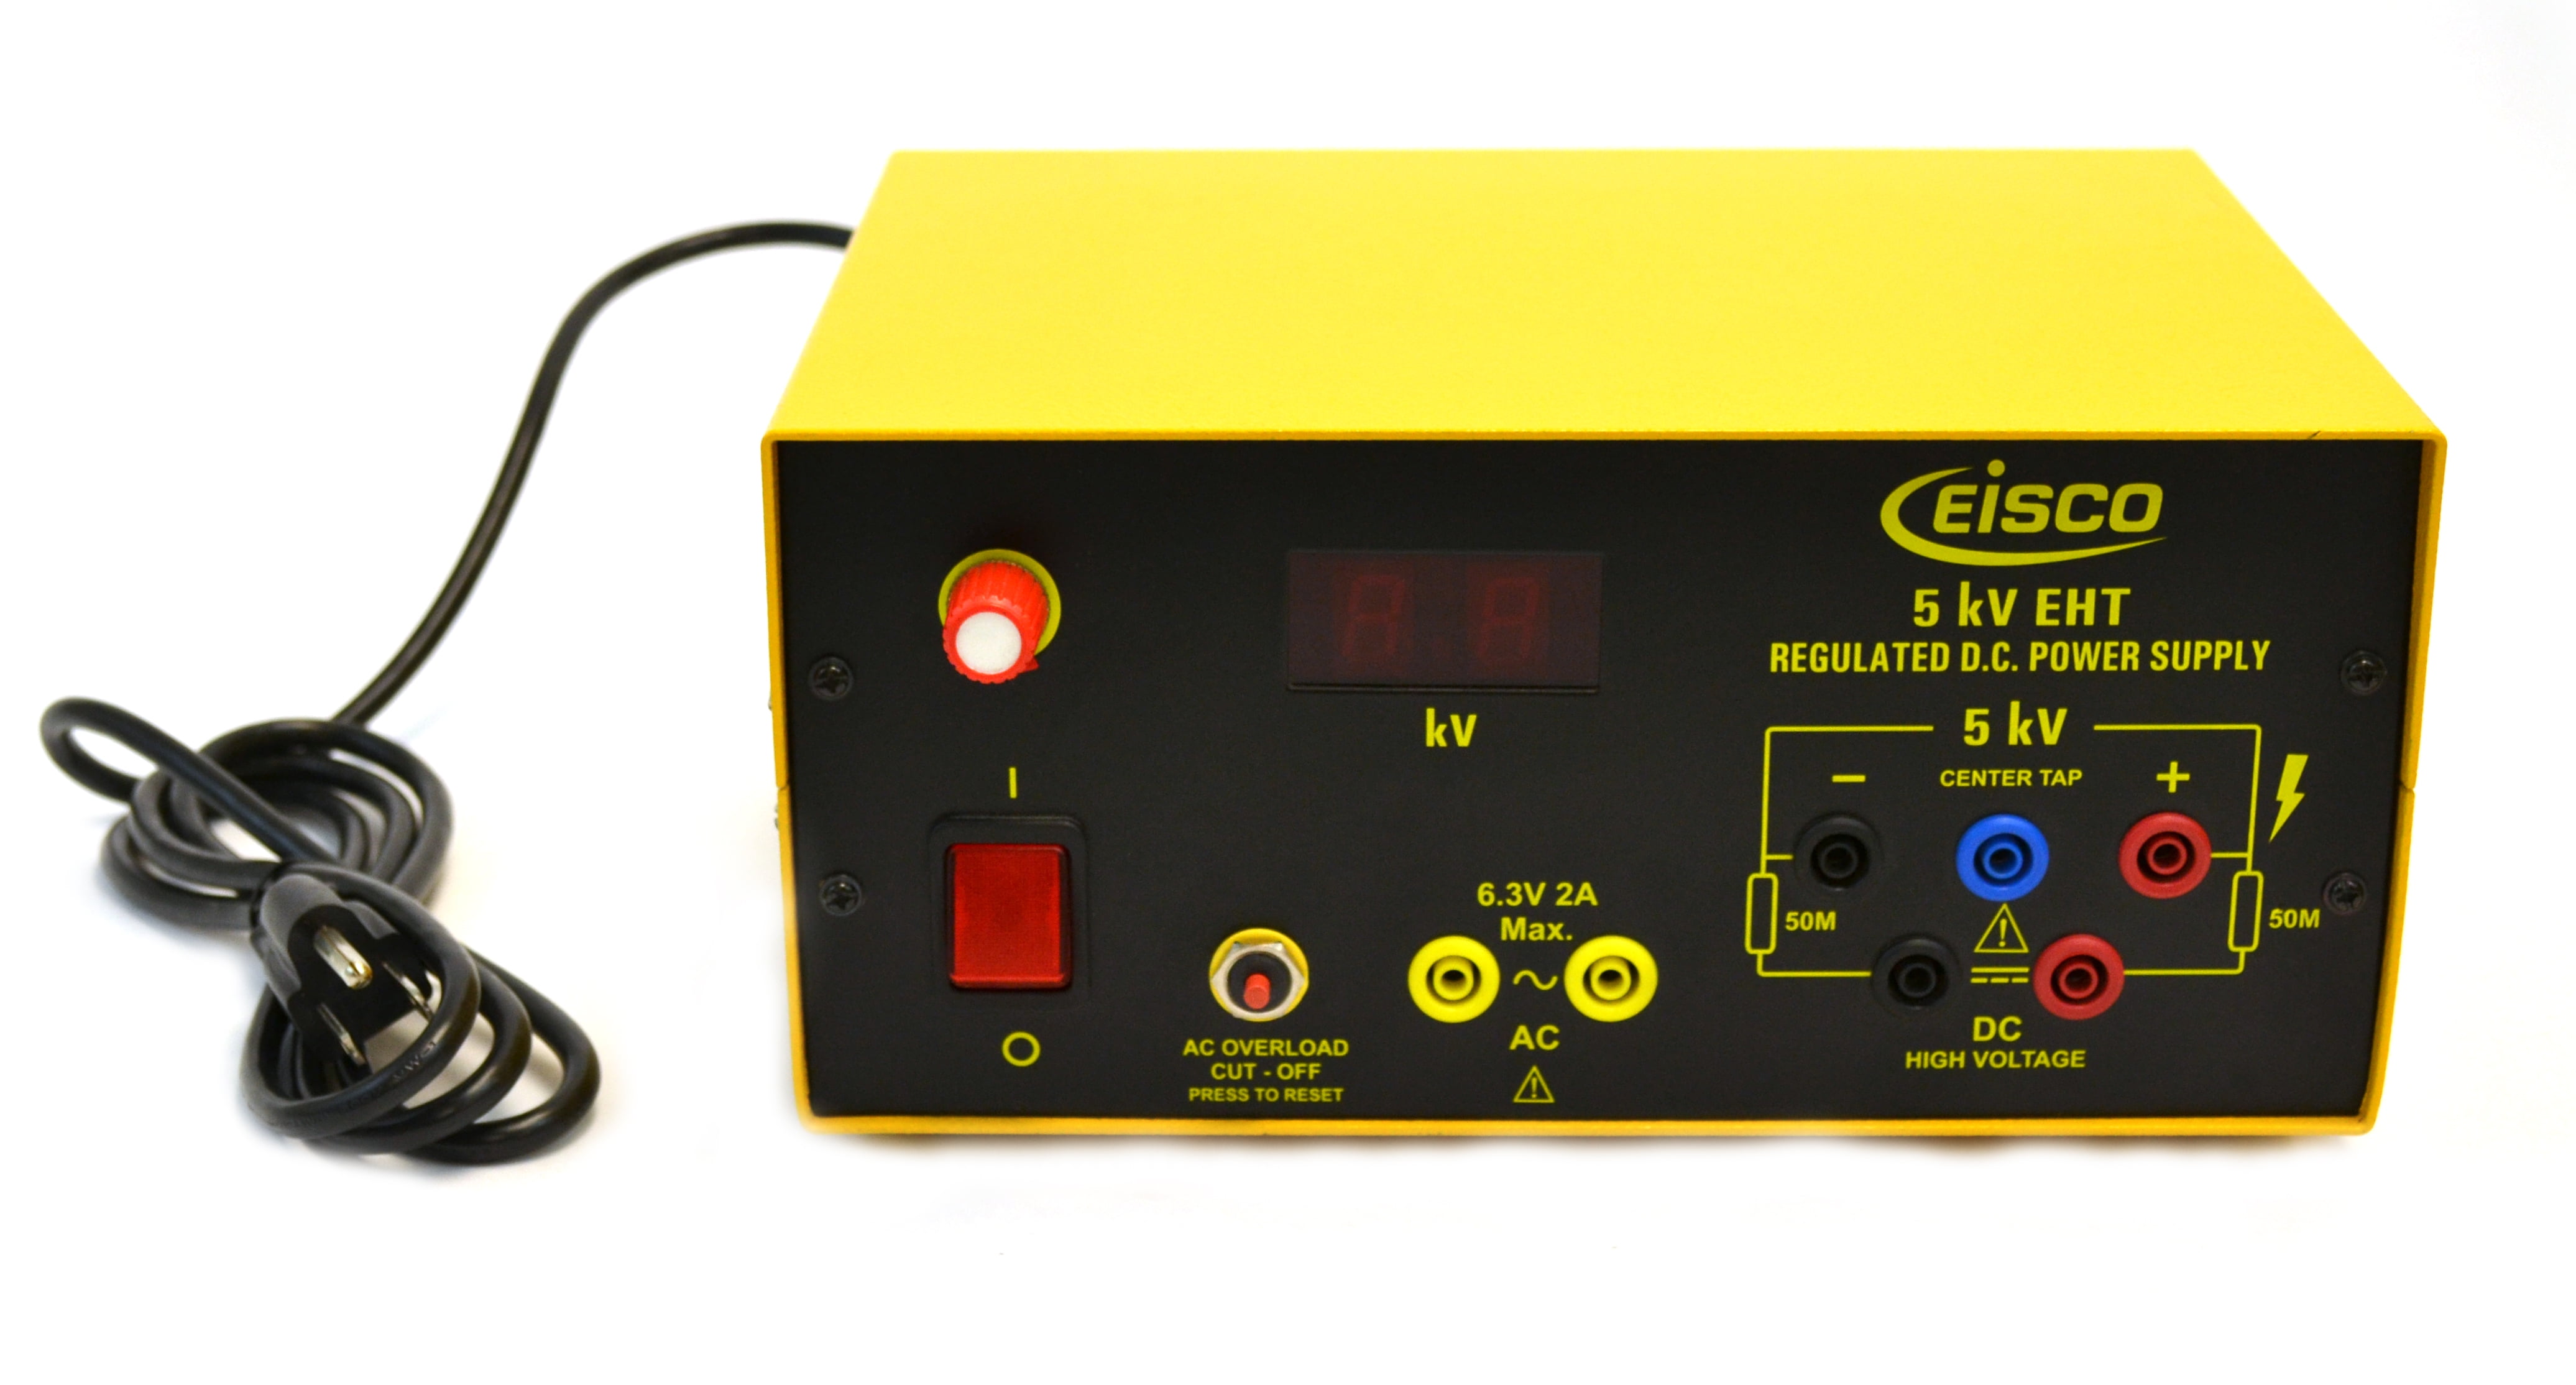 100V to 5kV at 3mA DC Regulated Power Supply - High Voltage - 6.3V at